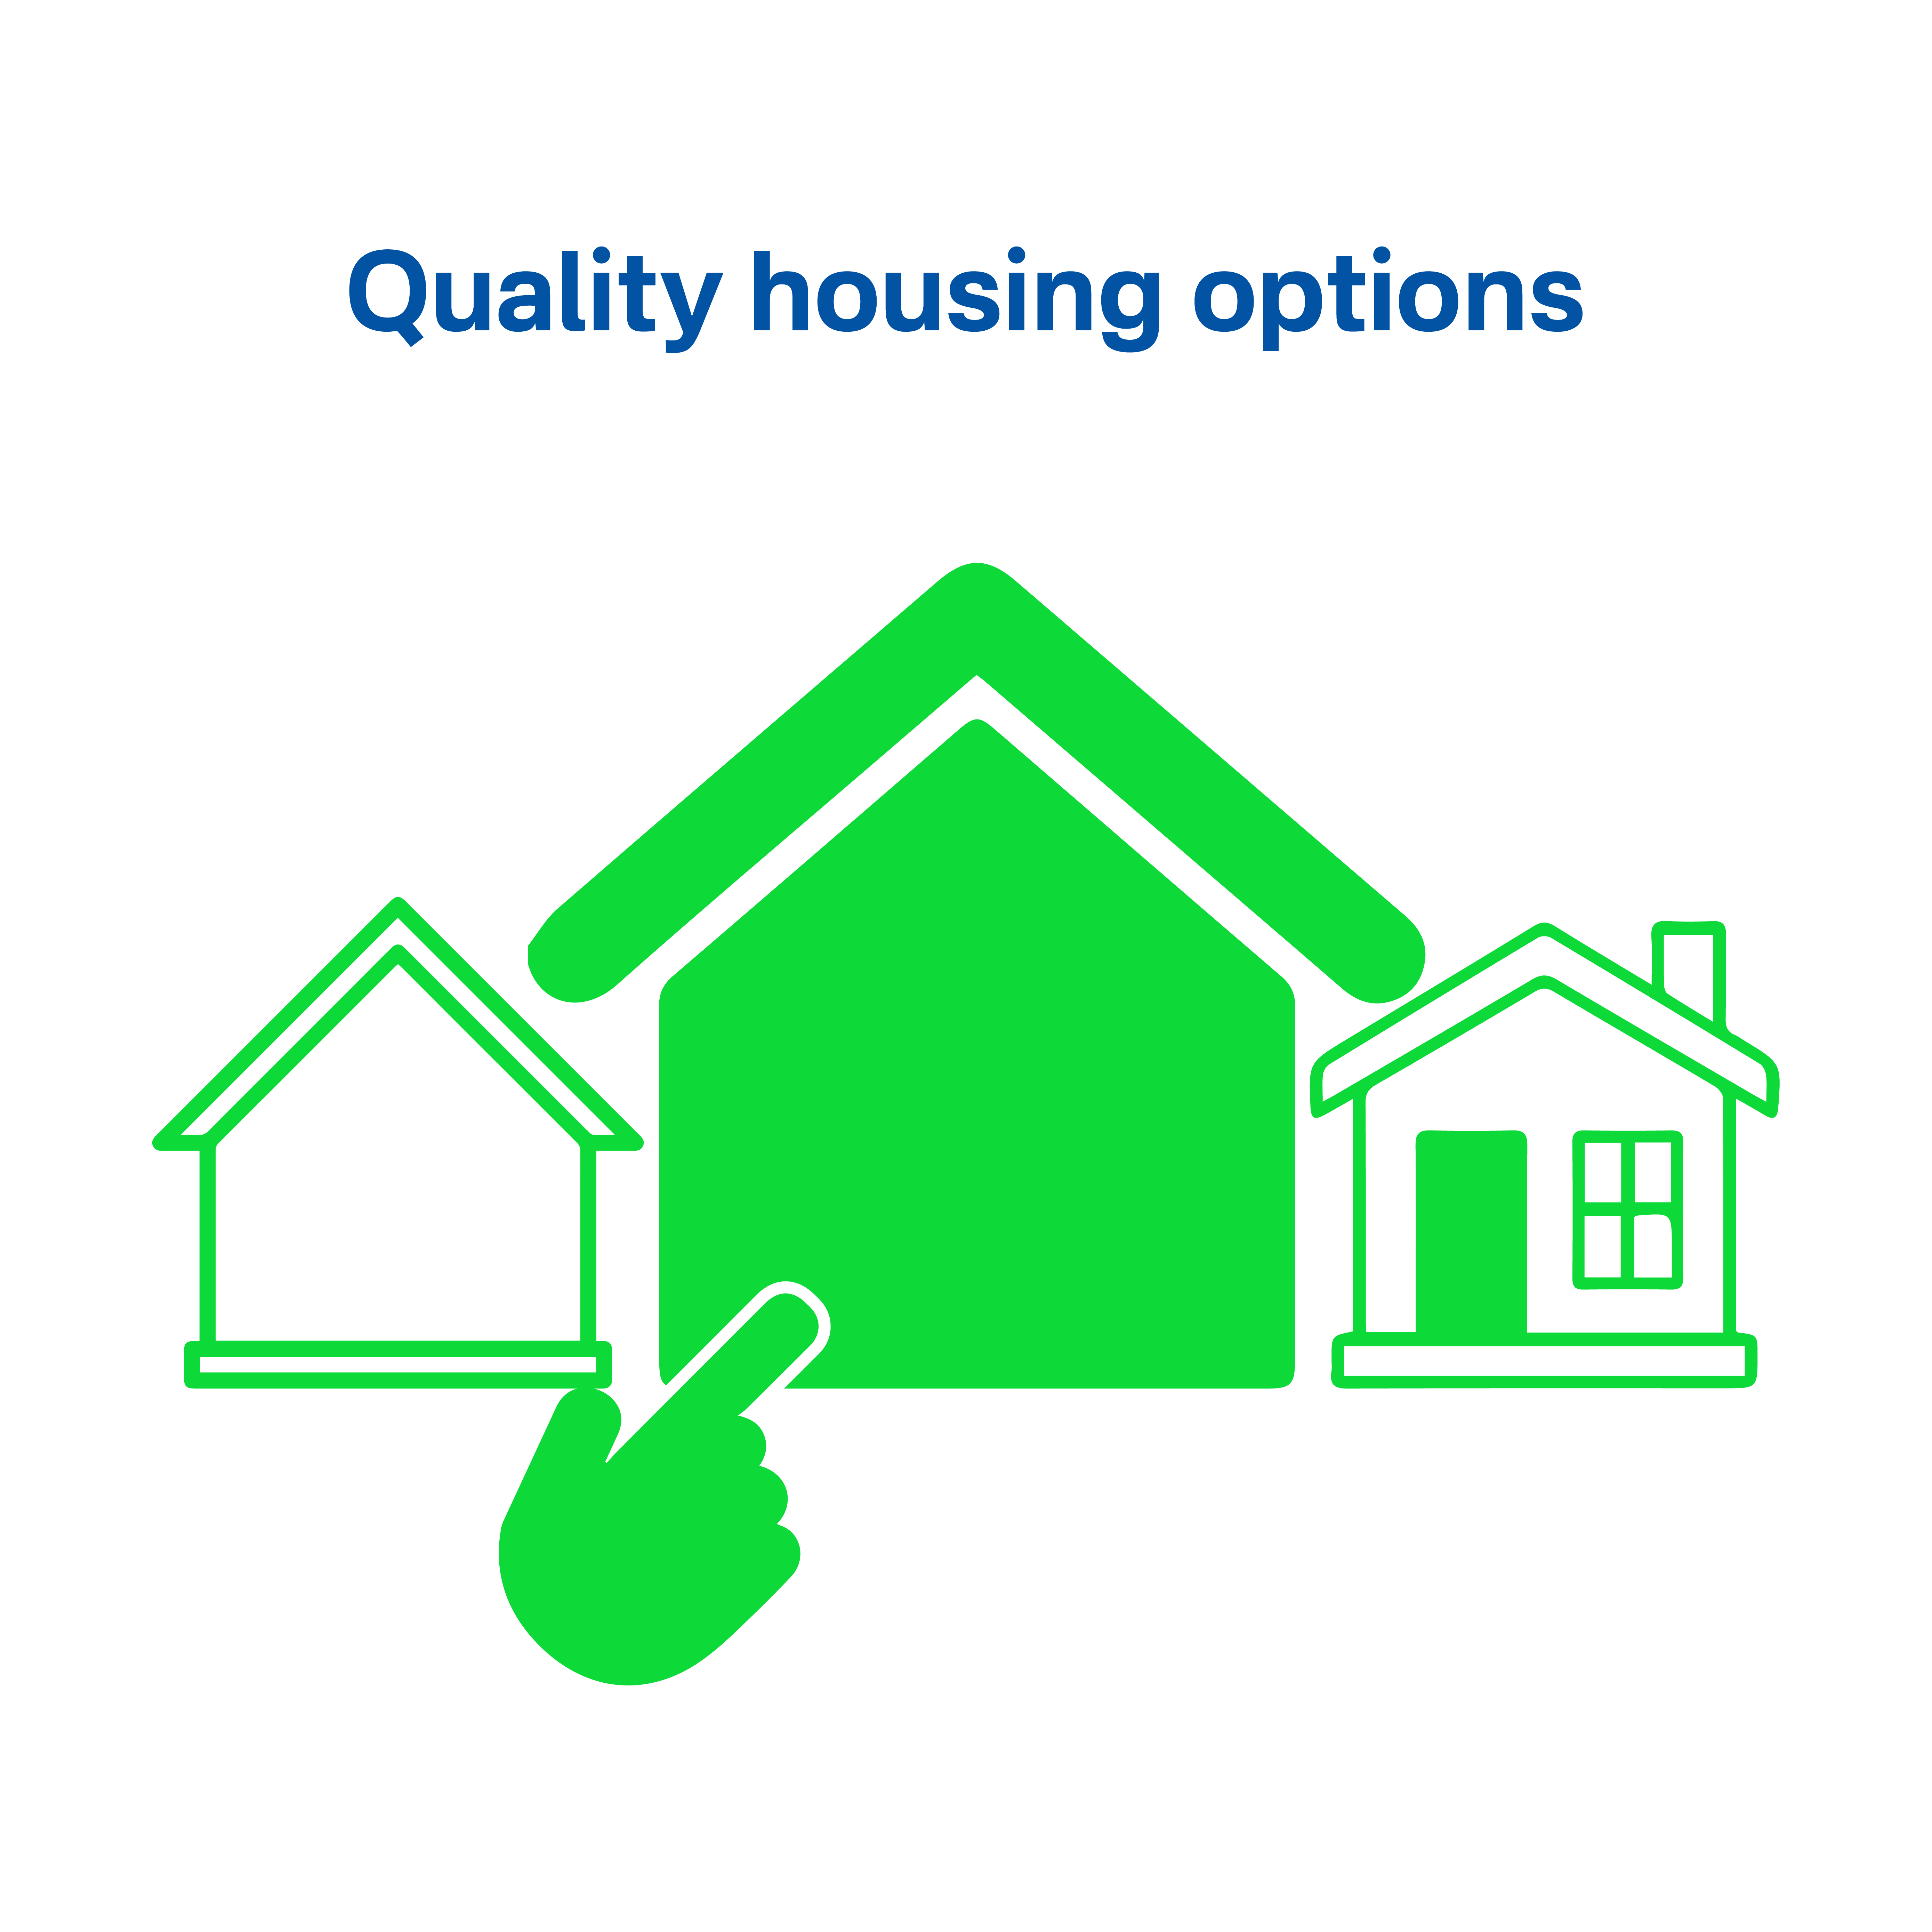 Quality housing options